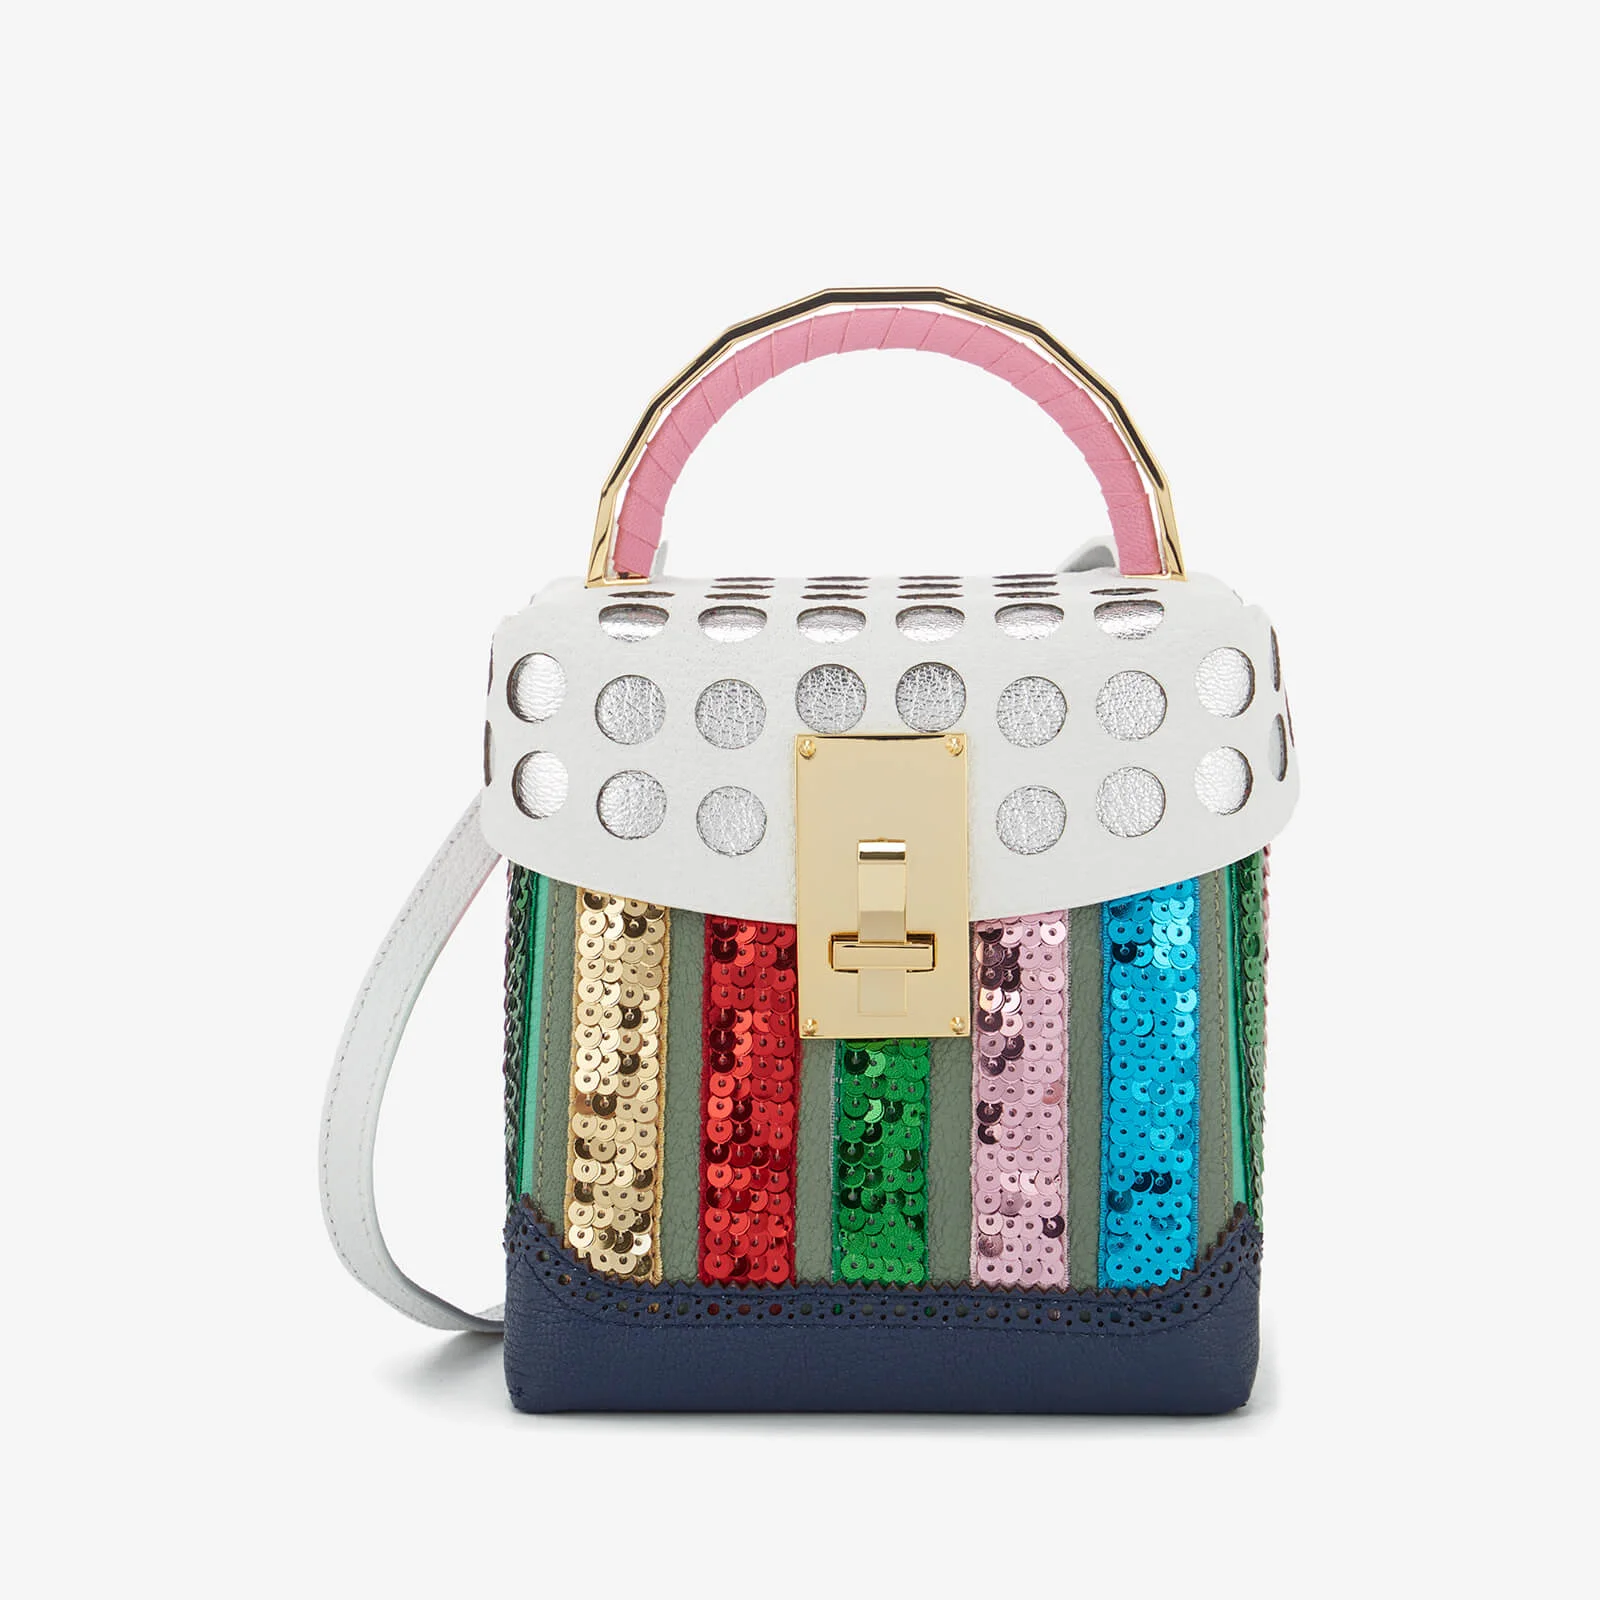 The Volon Women's Box KR Bag - Rainbow Spangle Image 1